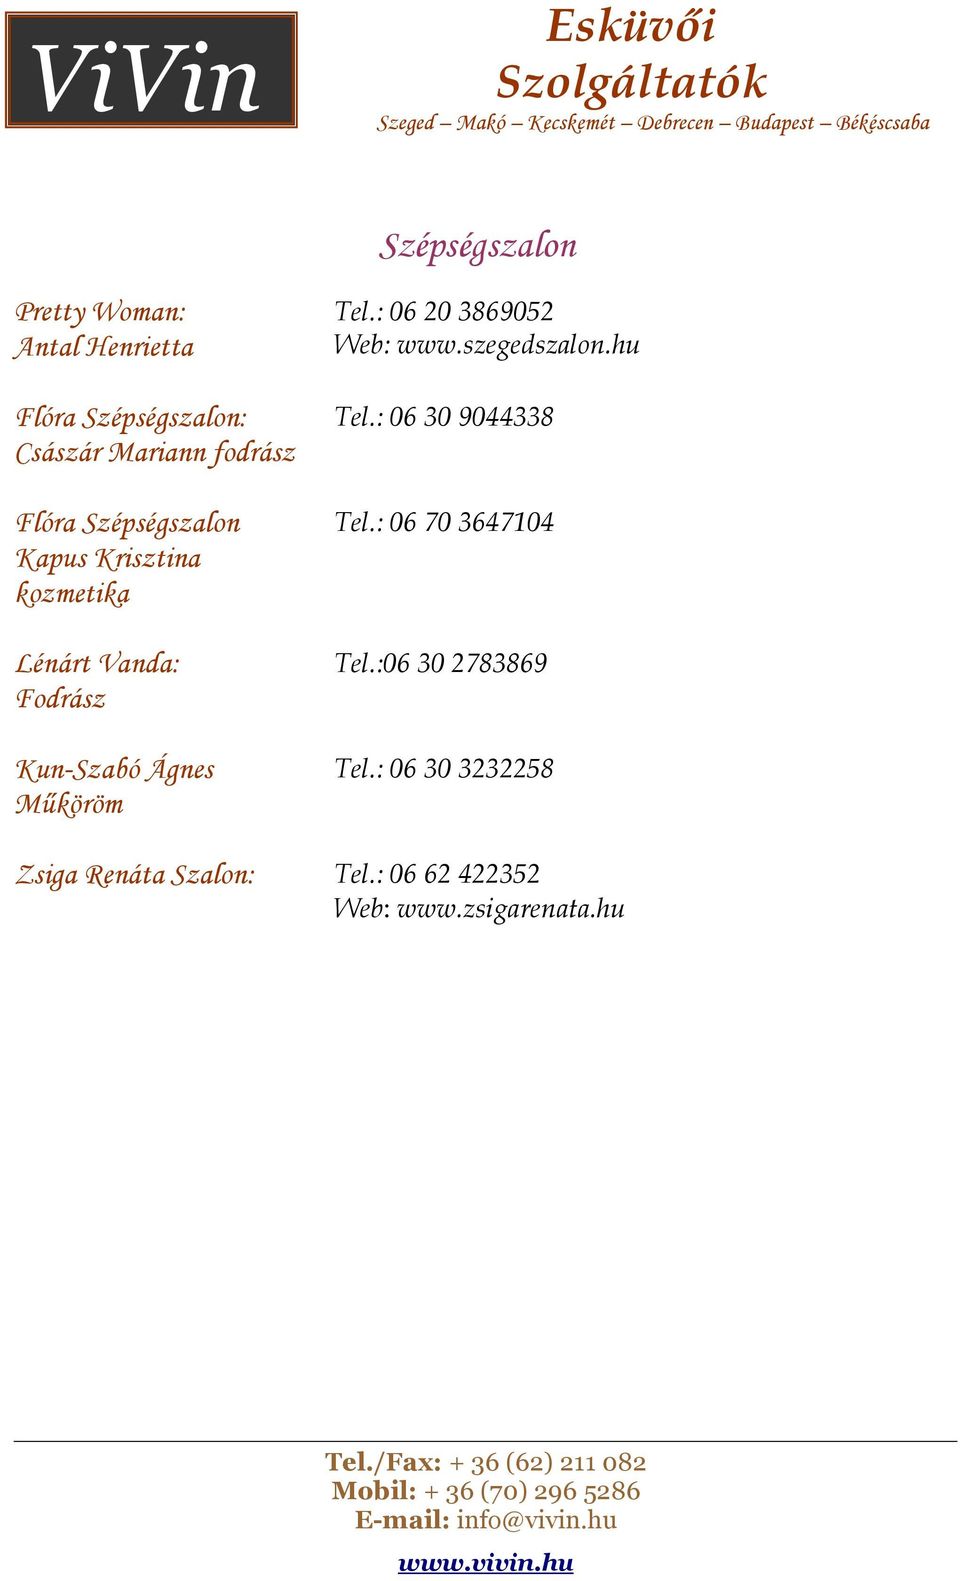 ViVin. Esküvıi Szolgáltatók. Tel./Fax: + 36 (62) Mobil: + 36 (70)  info@vivin.hu - PDF Free Download